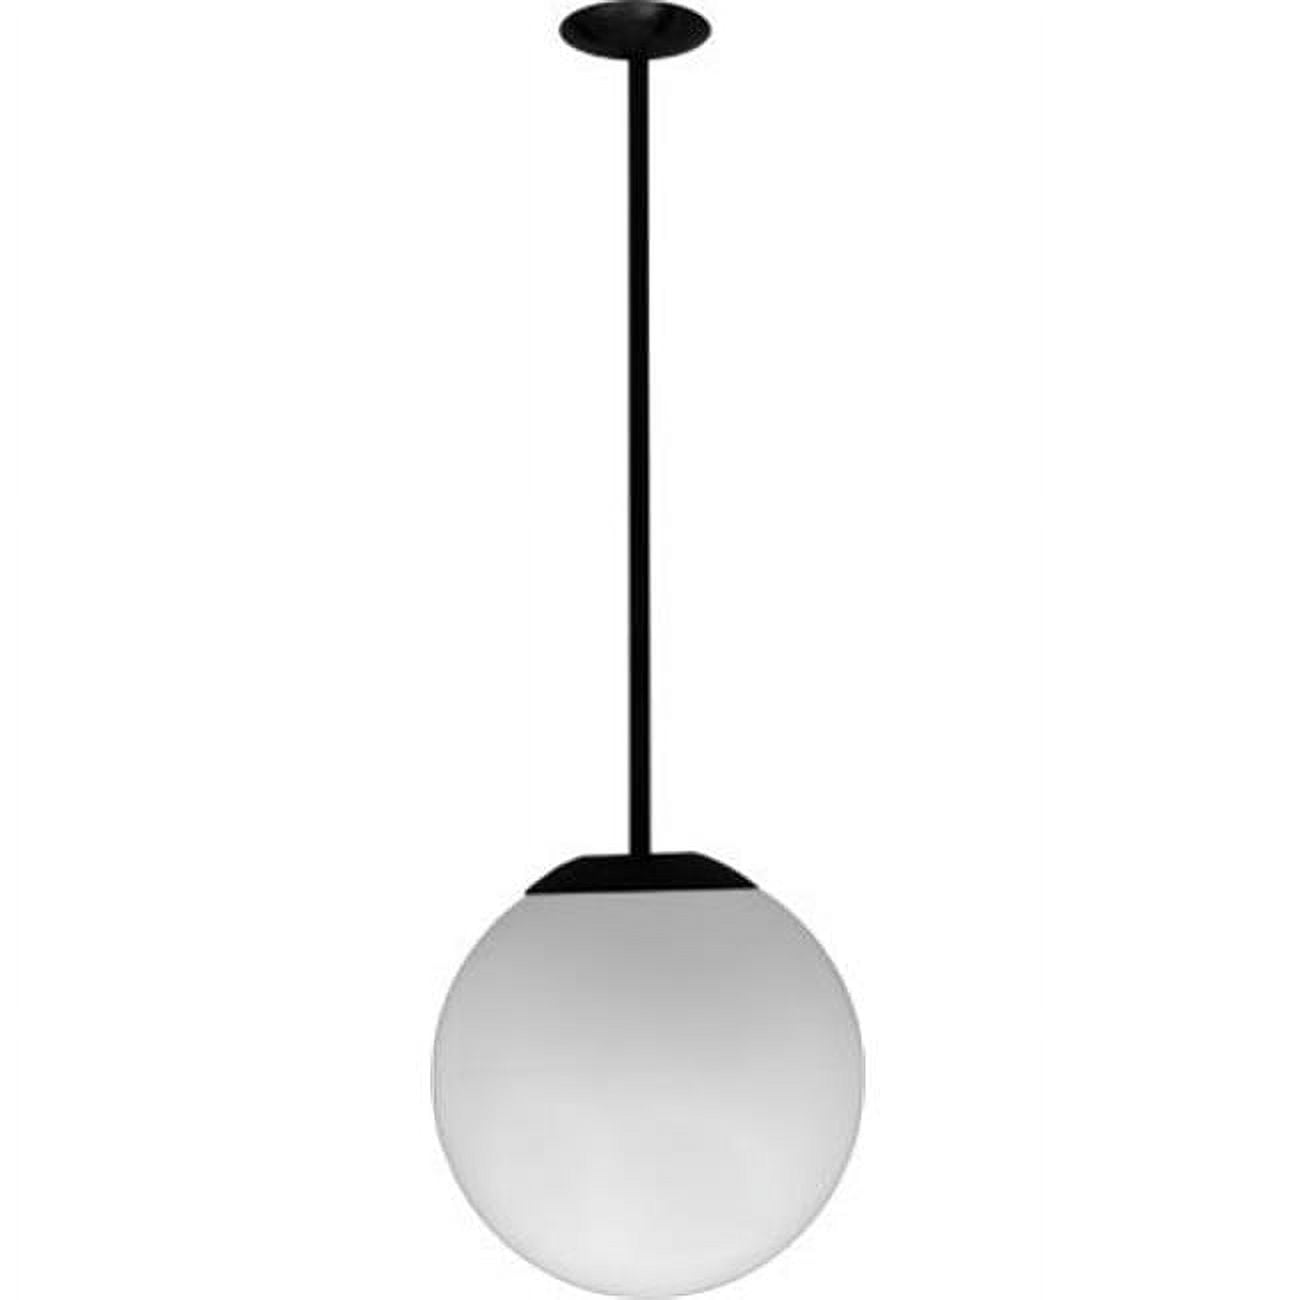 D7515-24-b 16 In. 120 V 50 Watts Ceiling Globe Fixture 24 In. Drop With Metal Halide Lamp, Black